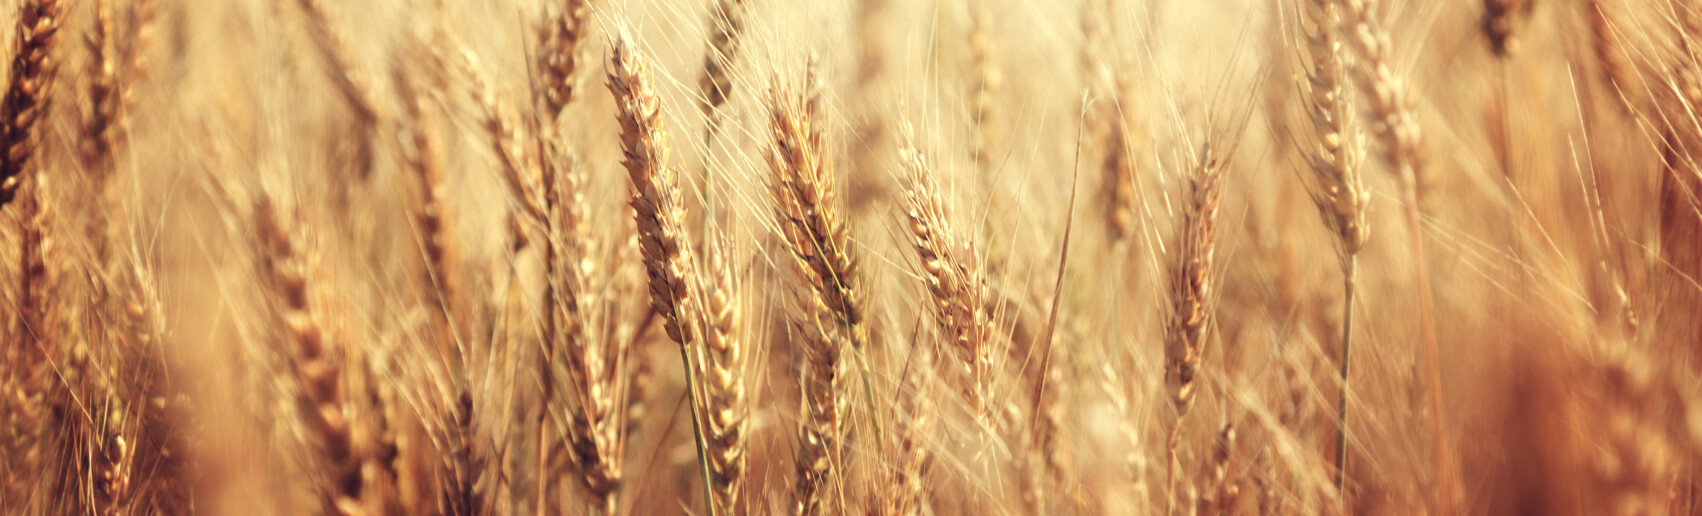 Barley and malt crops